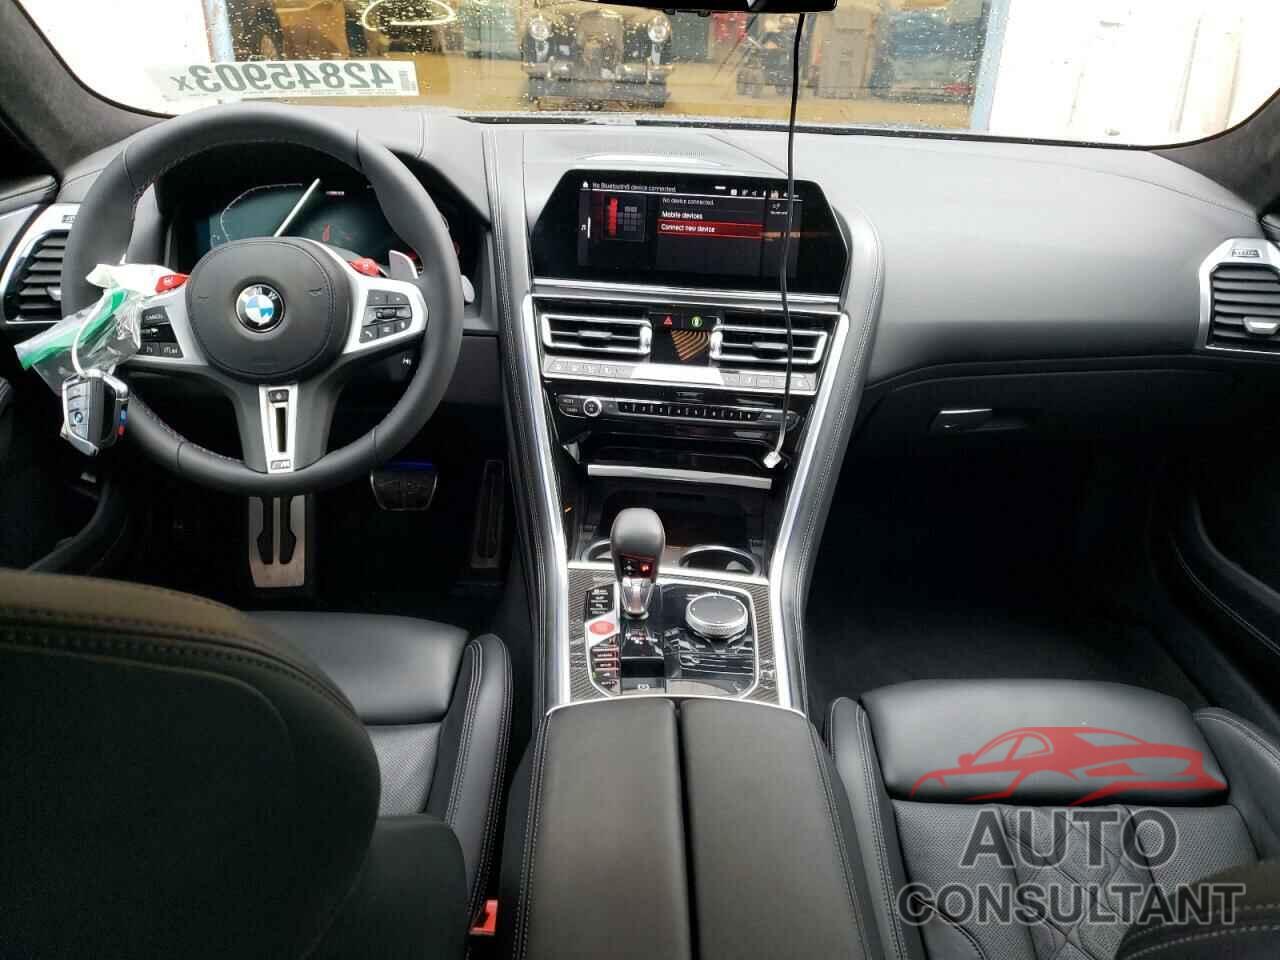 BMW M8 2020 - WBSGV0C07LCE39593